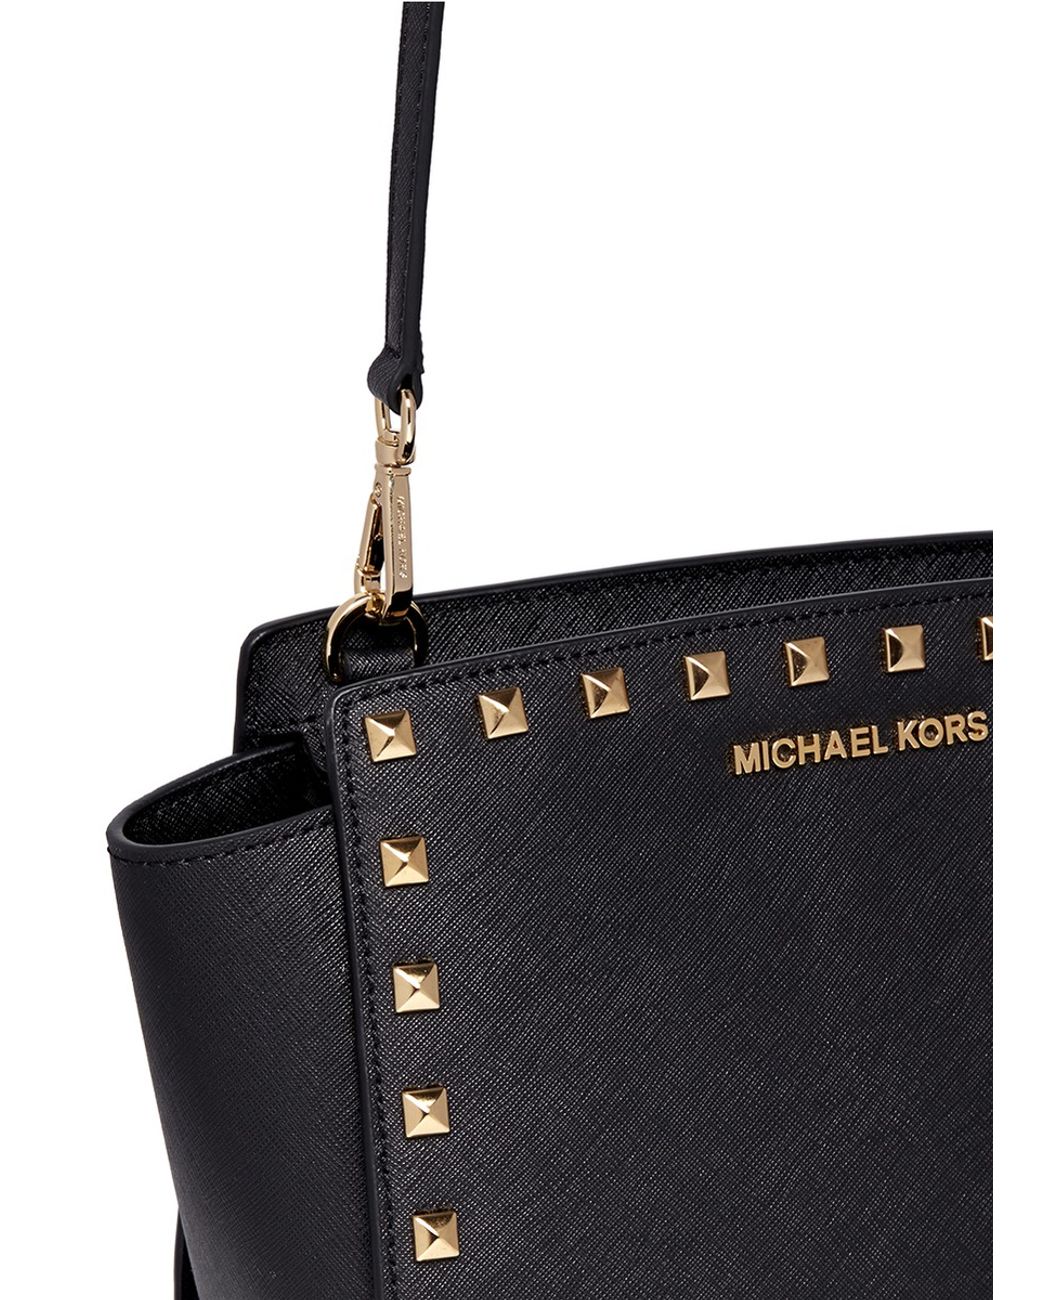 Michael Kors Selma Studded Saffiano-Leather Cross-Body Bag in